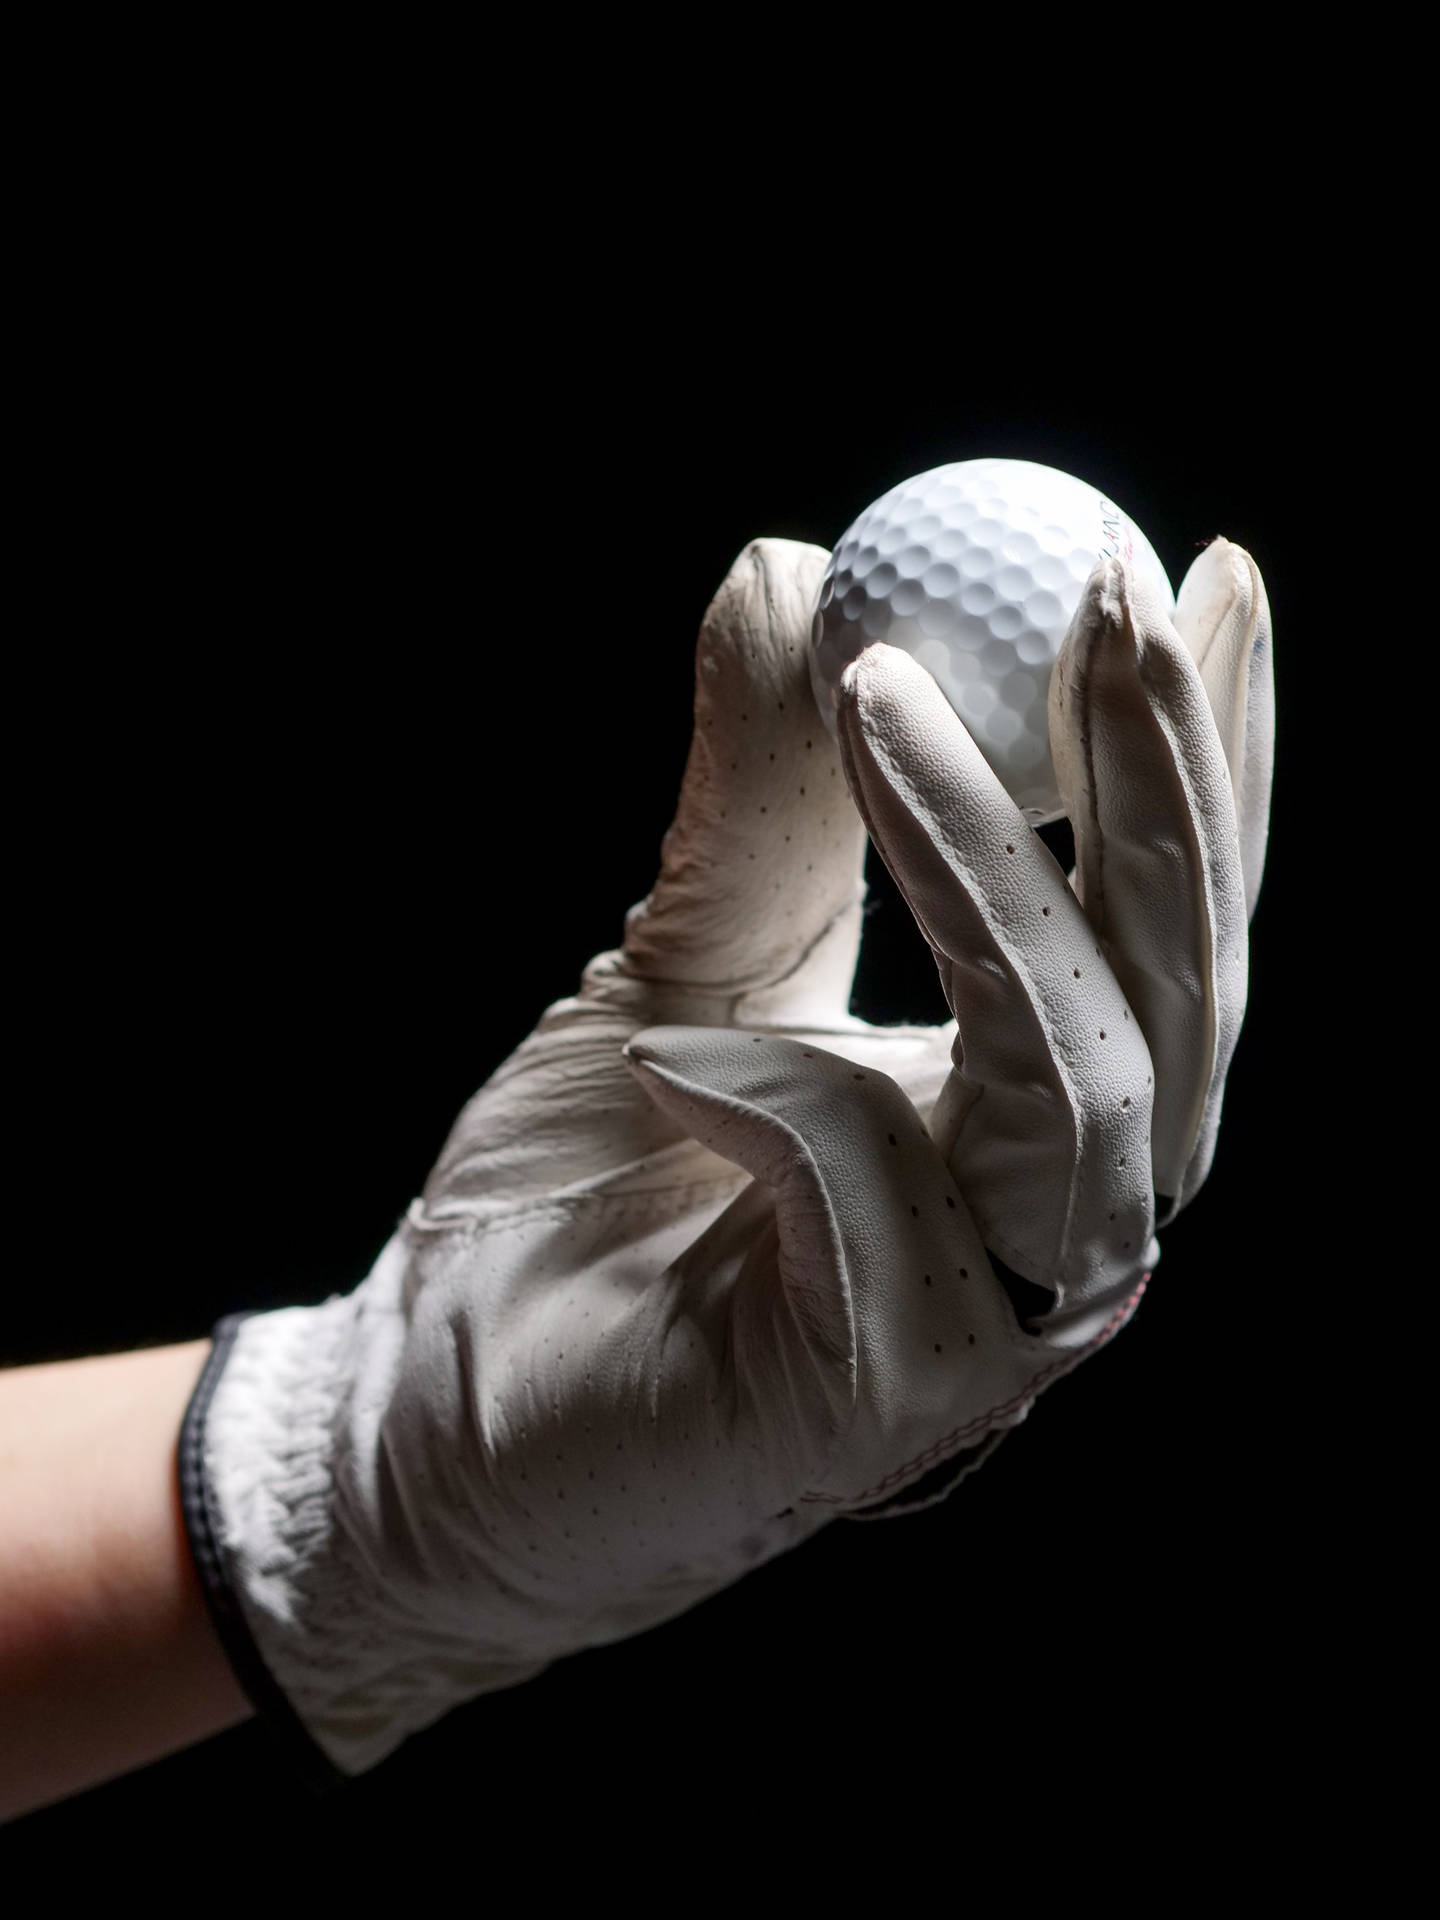 4k Hand Holding Golf Ball